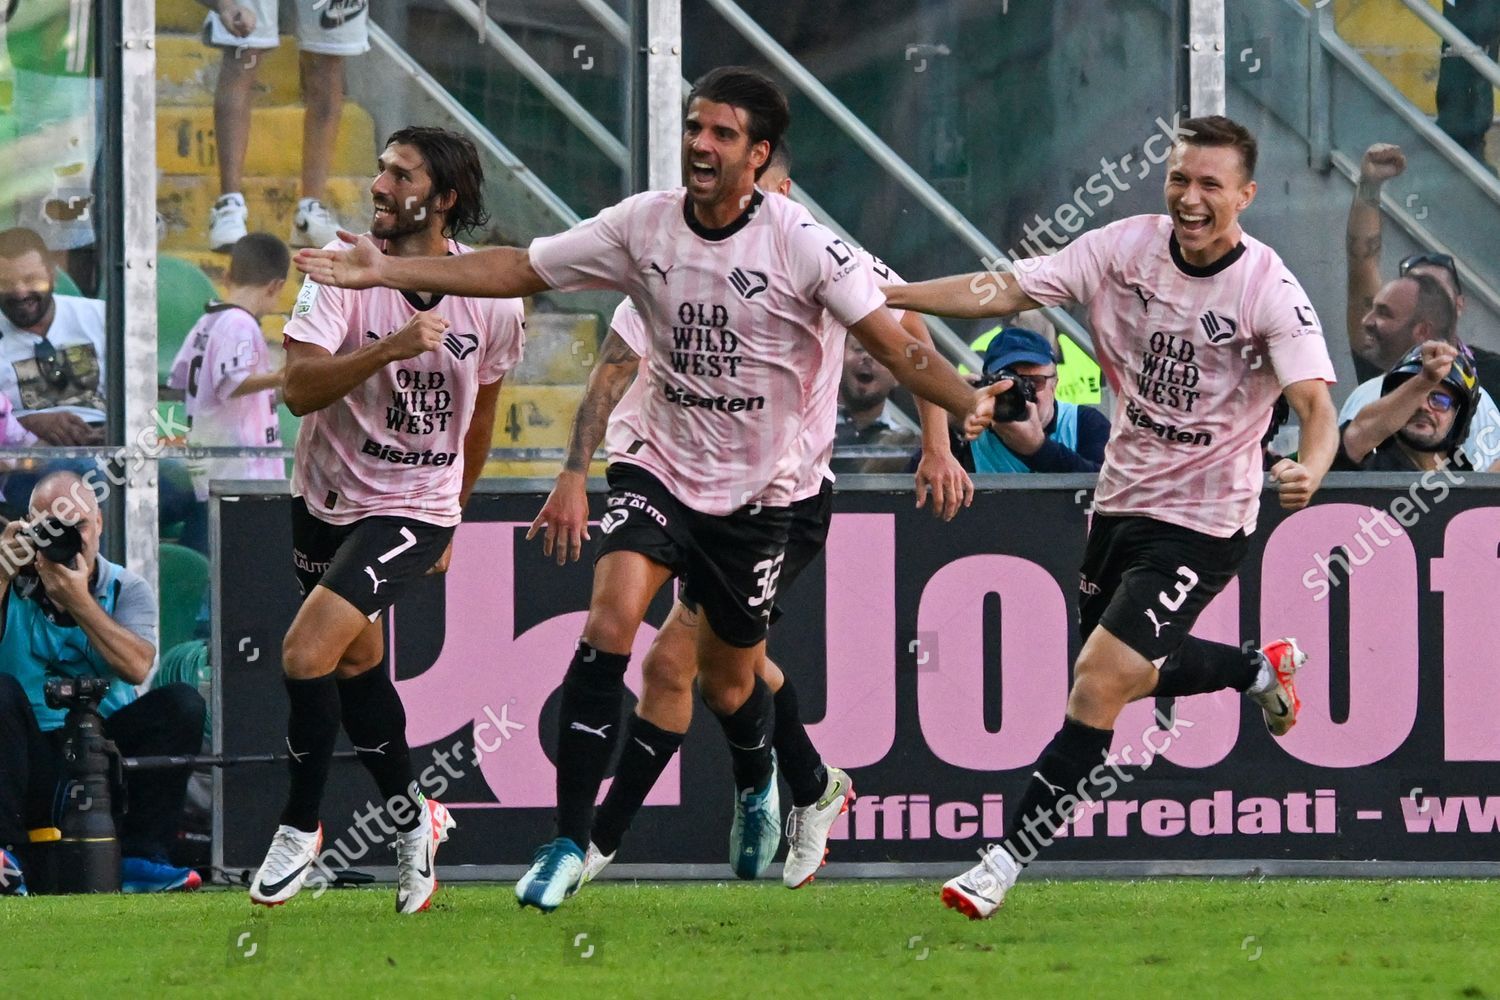 Palermo Tickets - Buy Palermo Football Club Tickets 2023